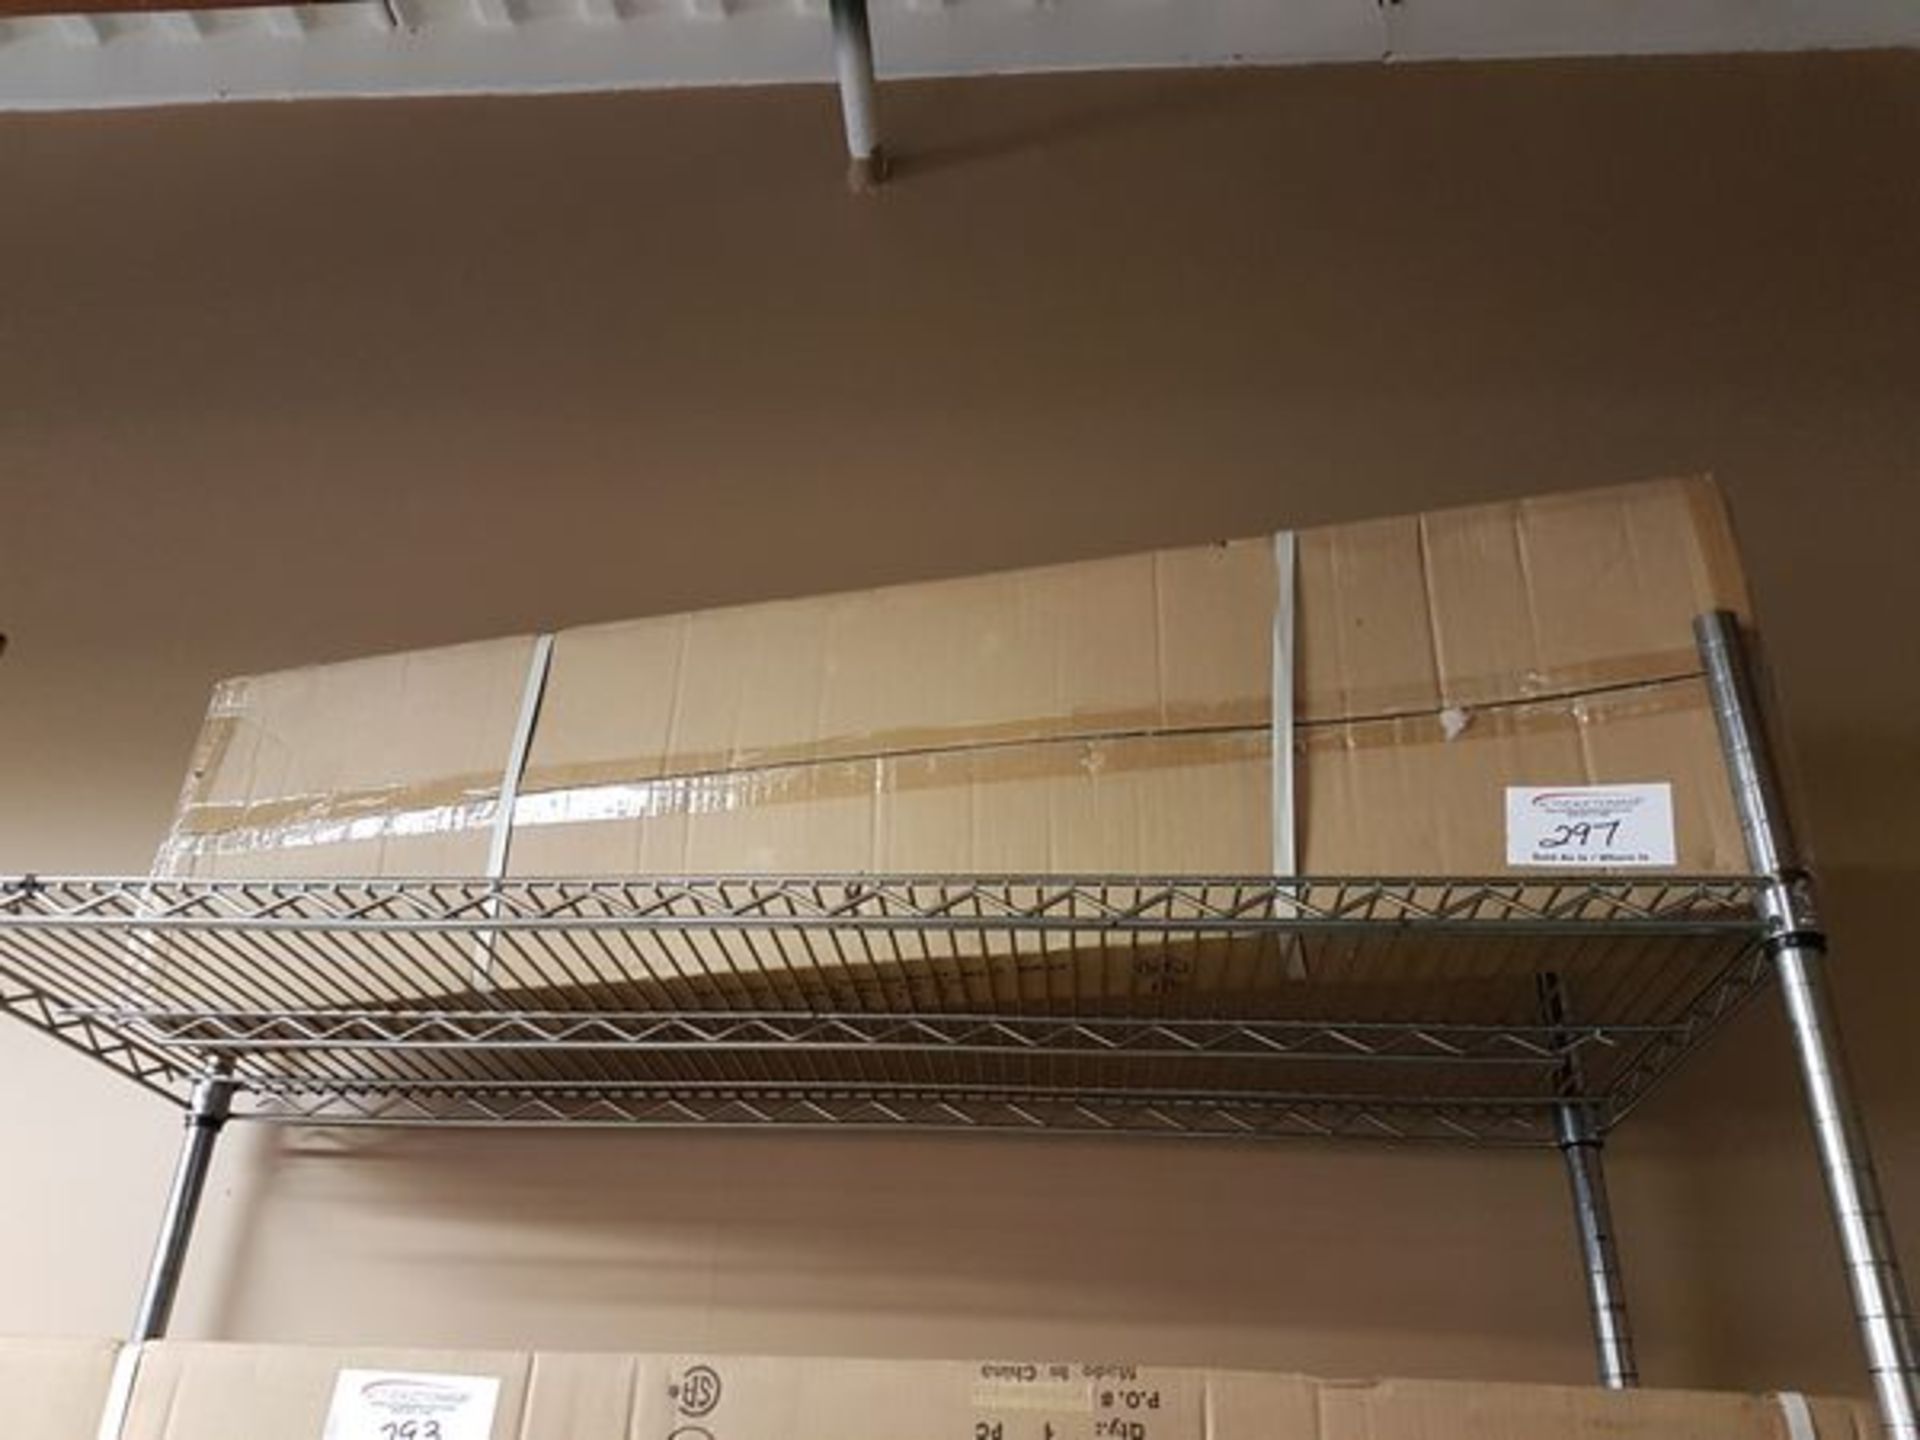 New 48" - Stainless Steel Wall Shelf